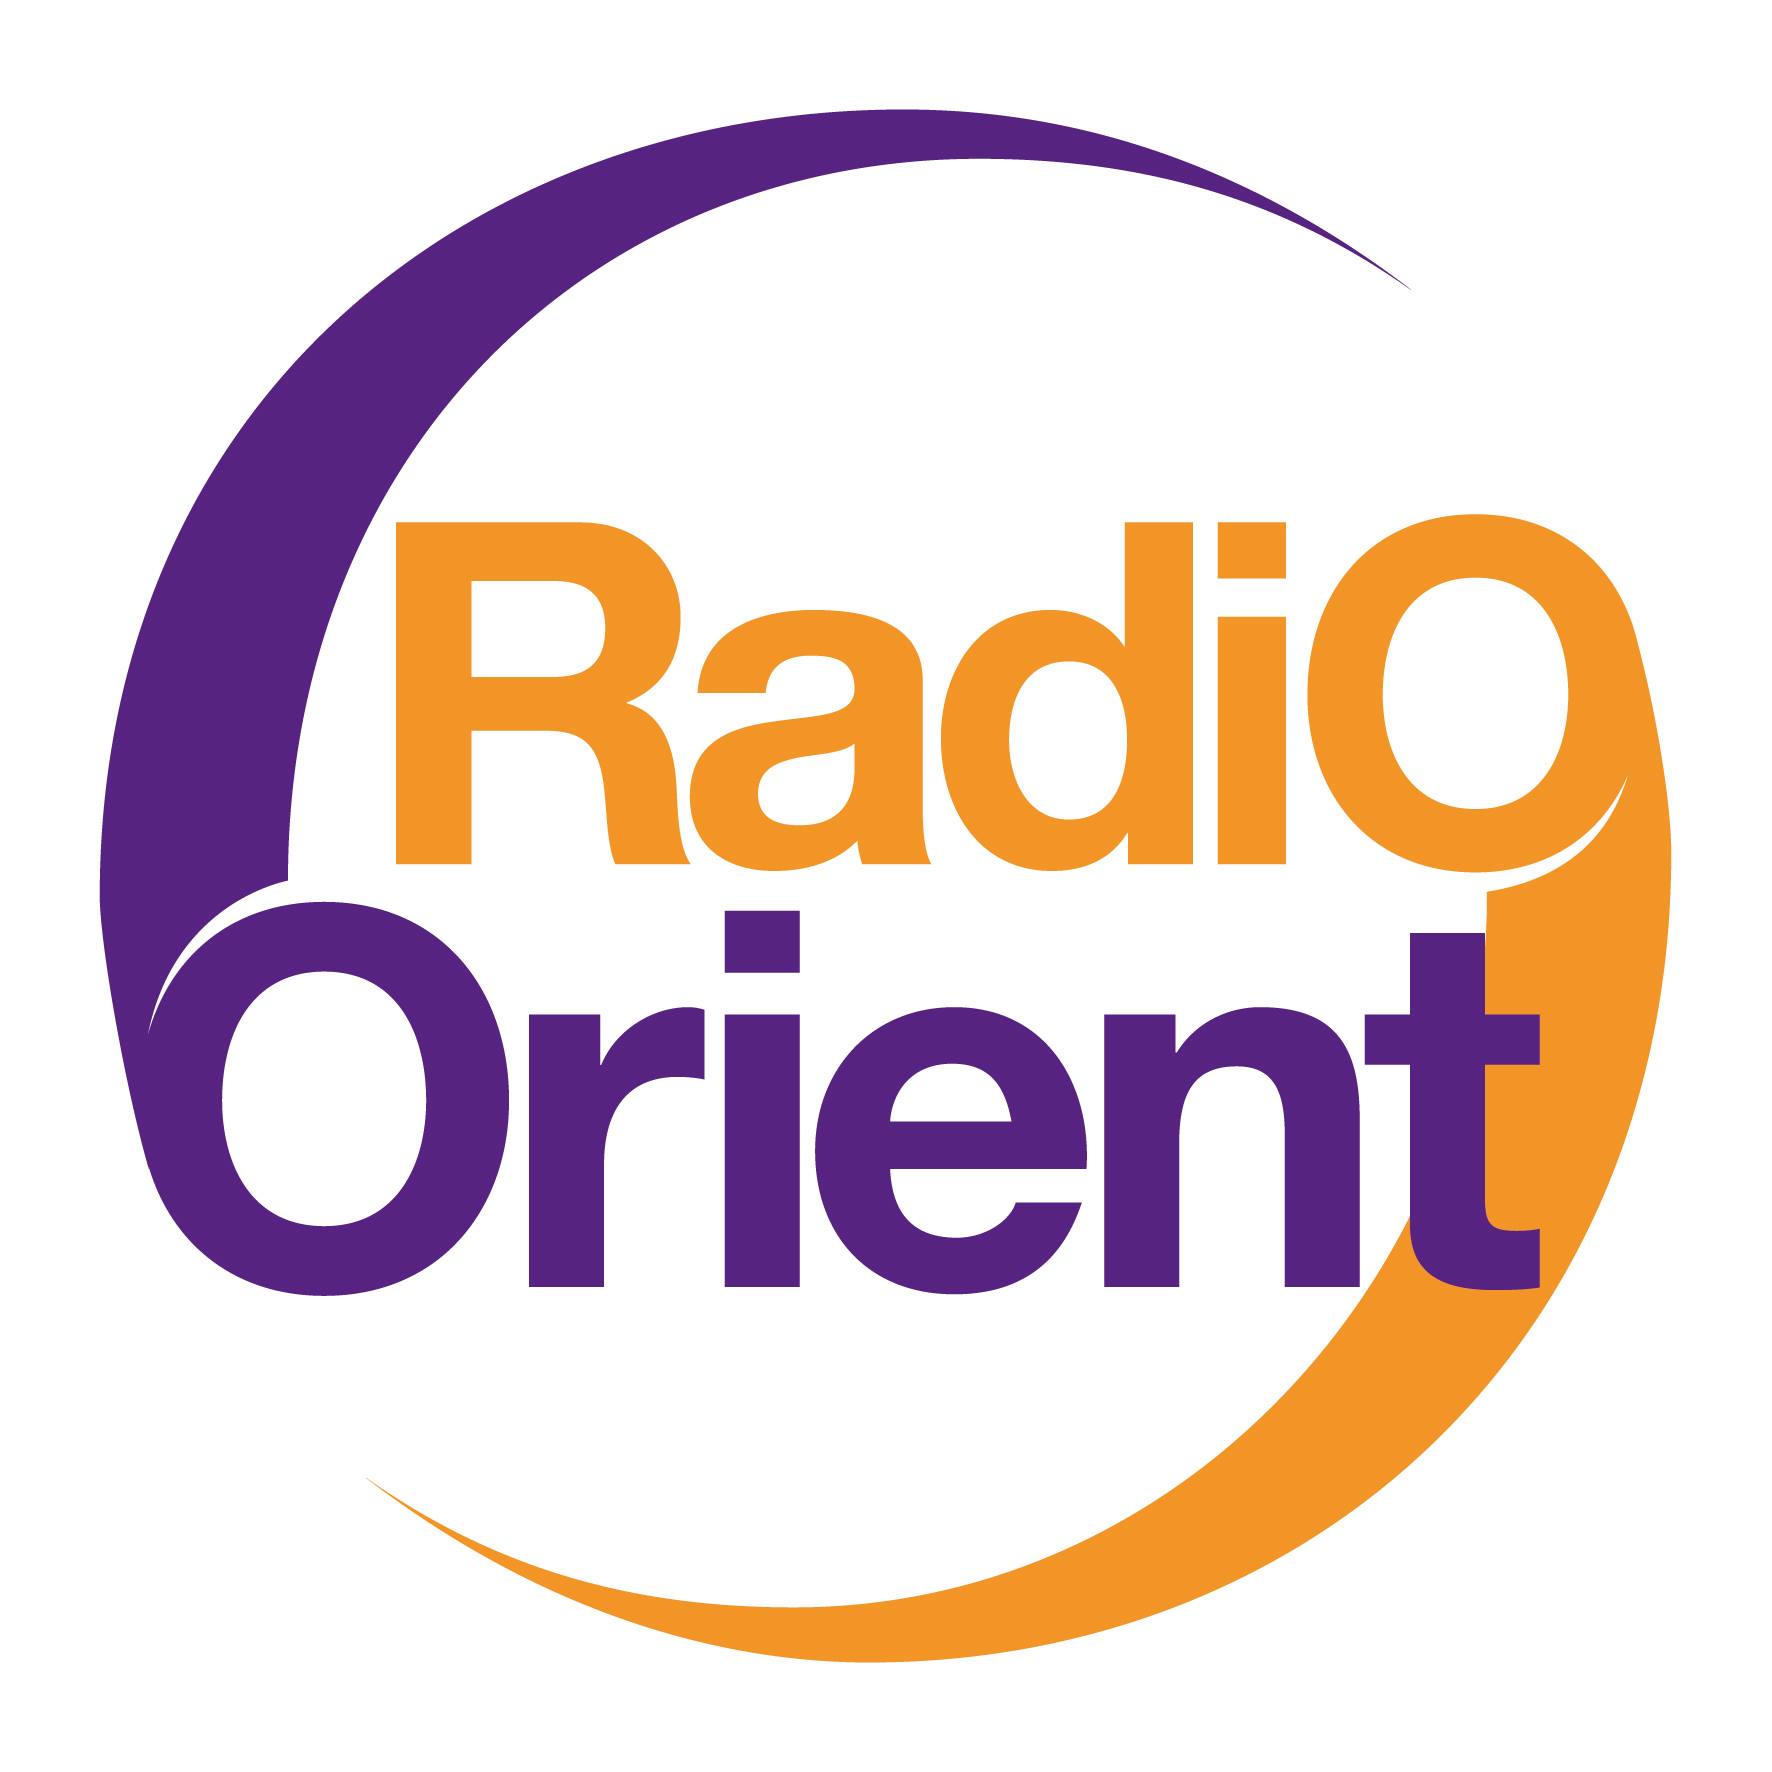 Radio Orient recrute des animateurs(trices) arabophones et francophones